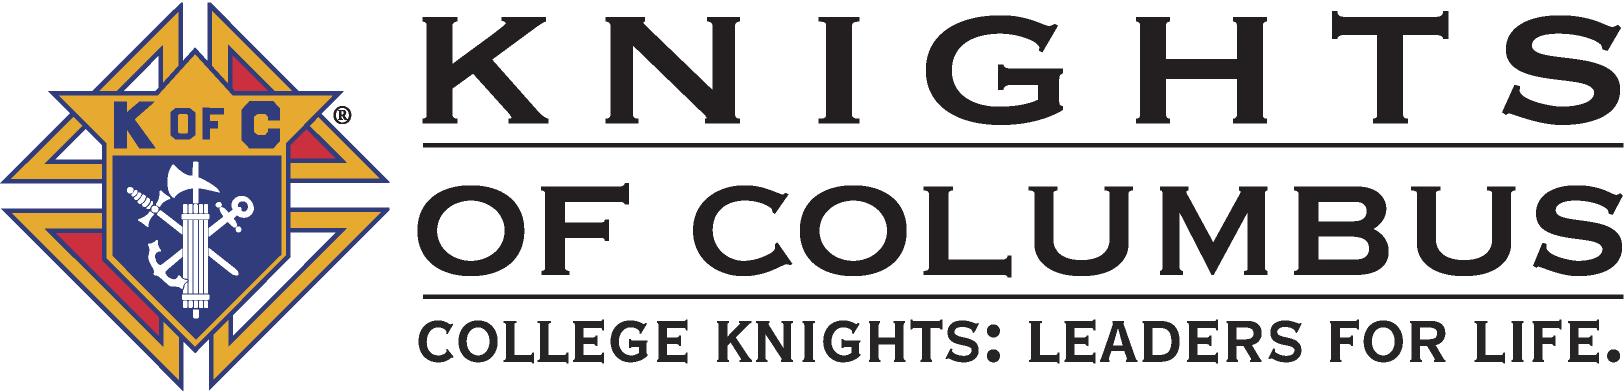 Knights Of Columbus Logo Png